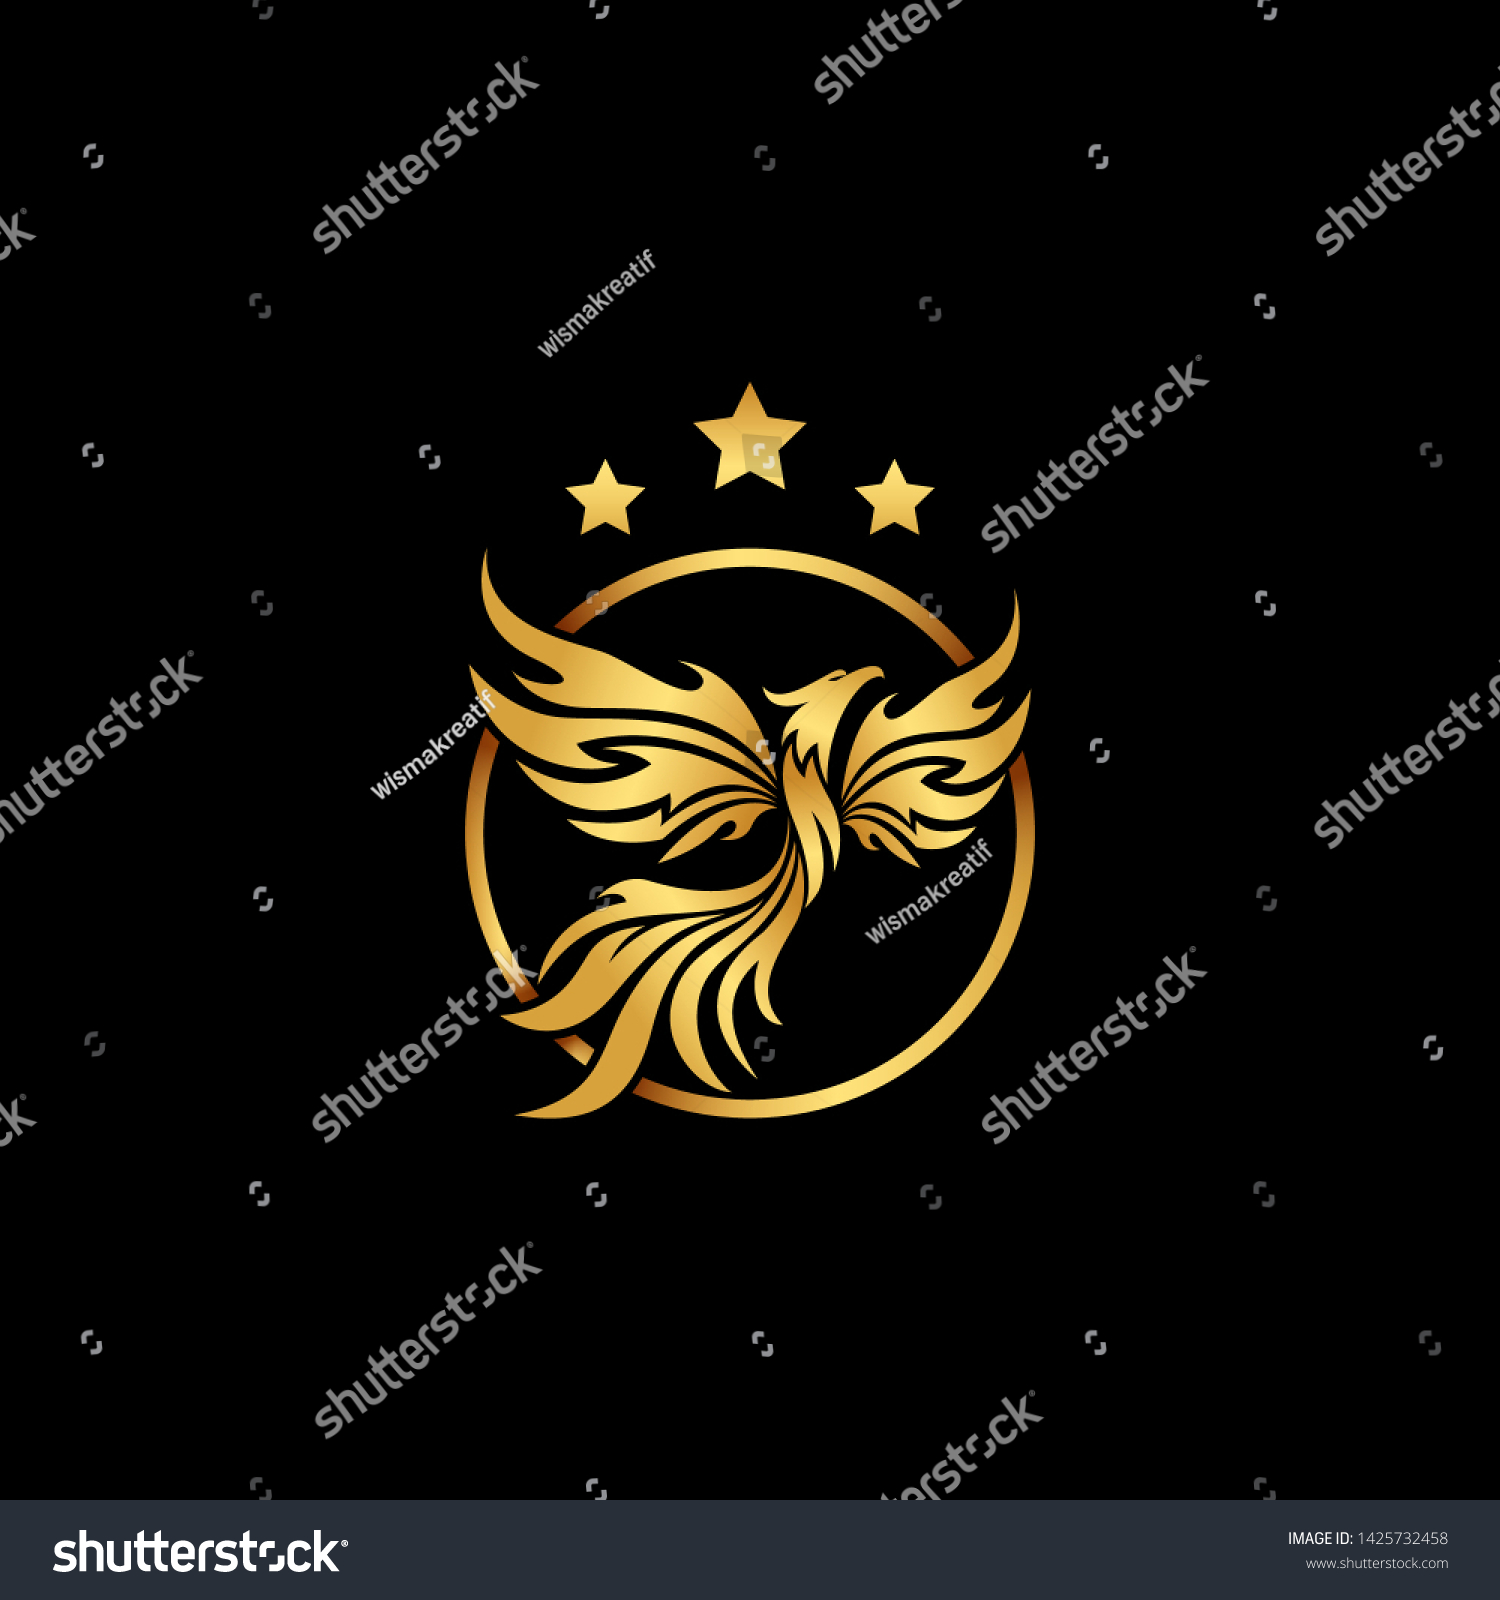 Golden Phoenix Logo Design Your Company Stock Vector Royalty Free